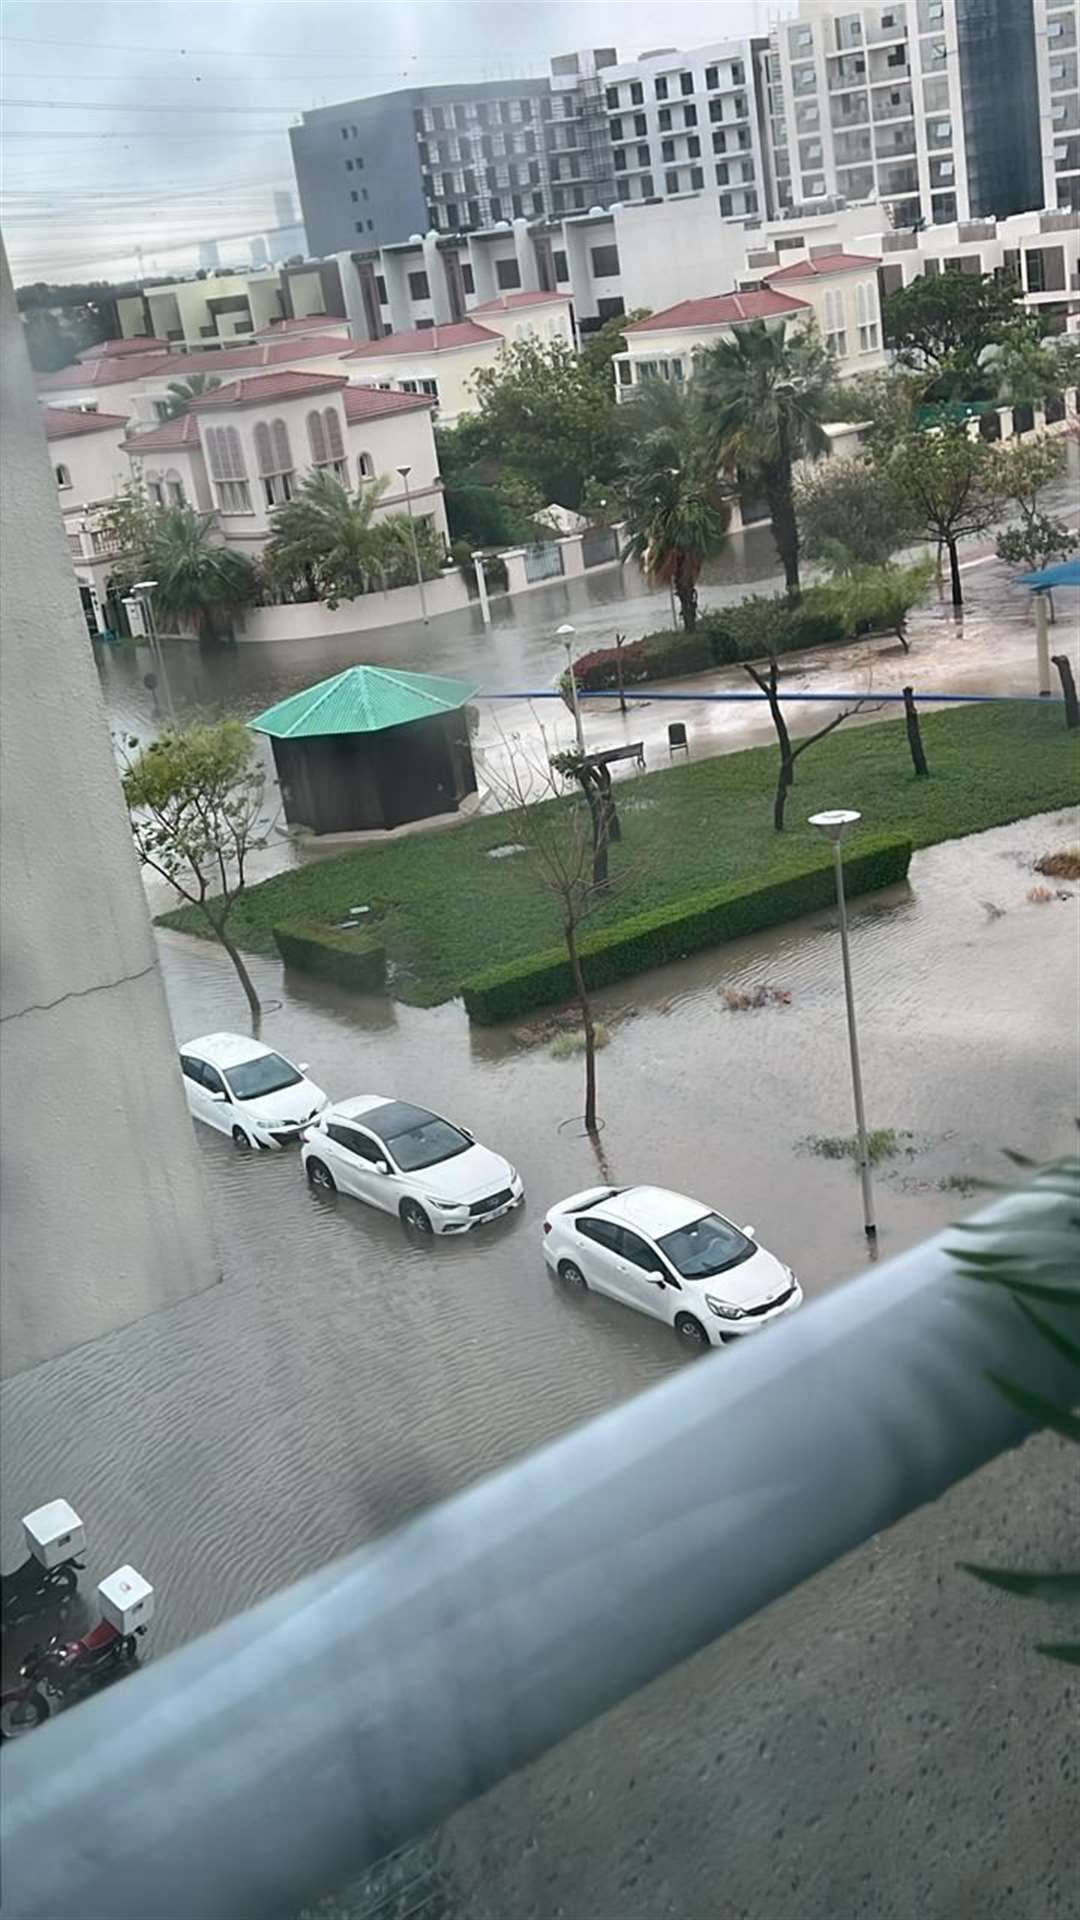 Flooding in Dubai (Jake McCulloch/PA)